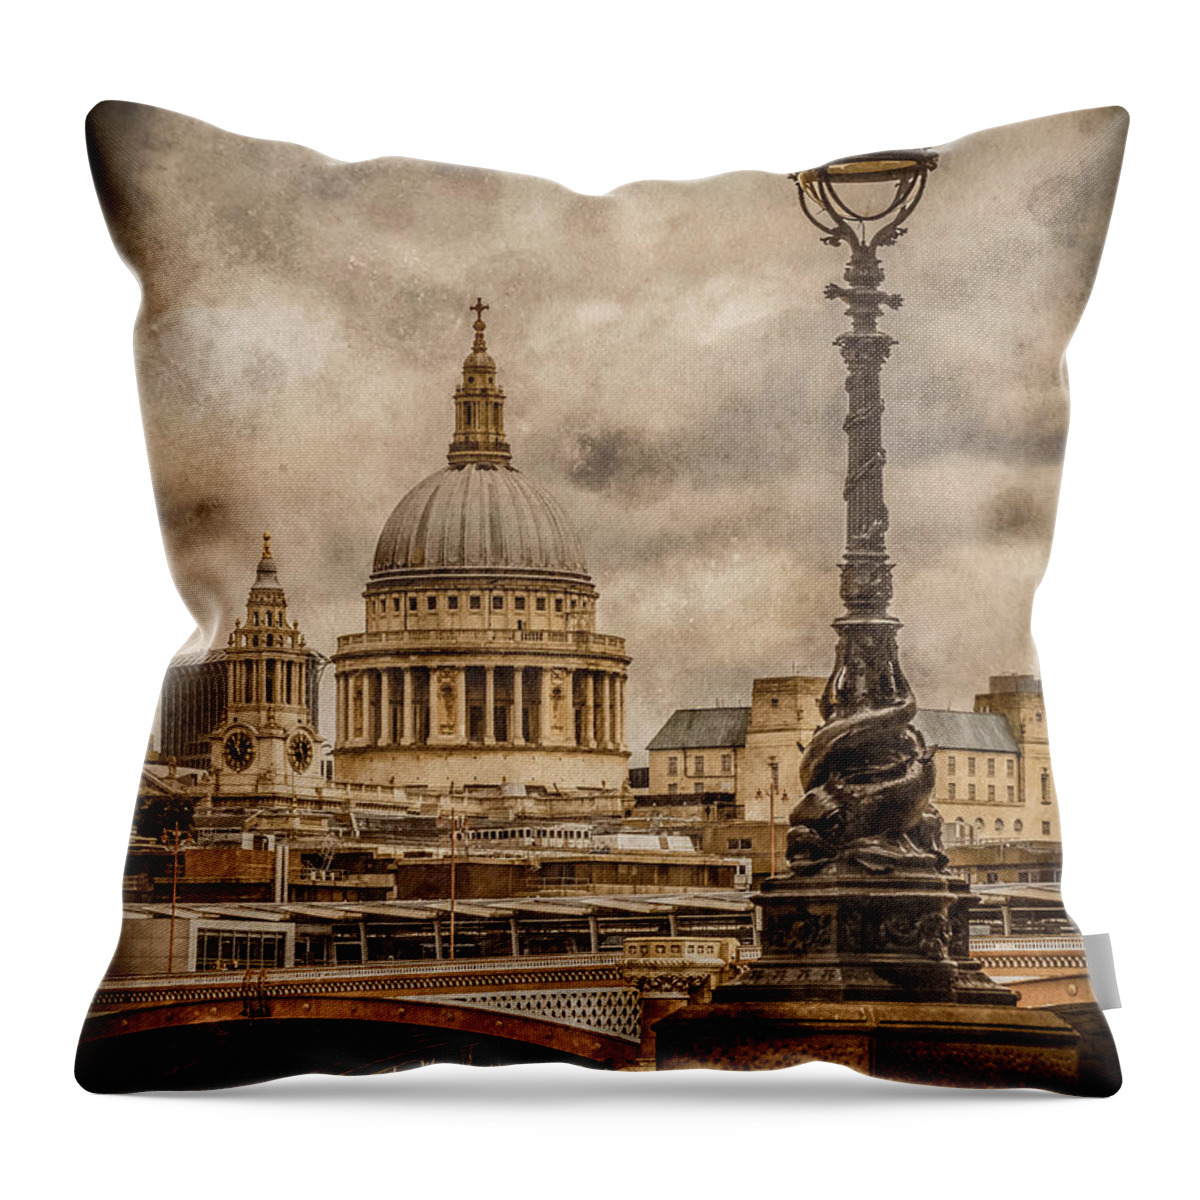 England Throw Pillow featuring the photograph London, England - Saint Paul's by Mark Forte